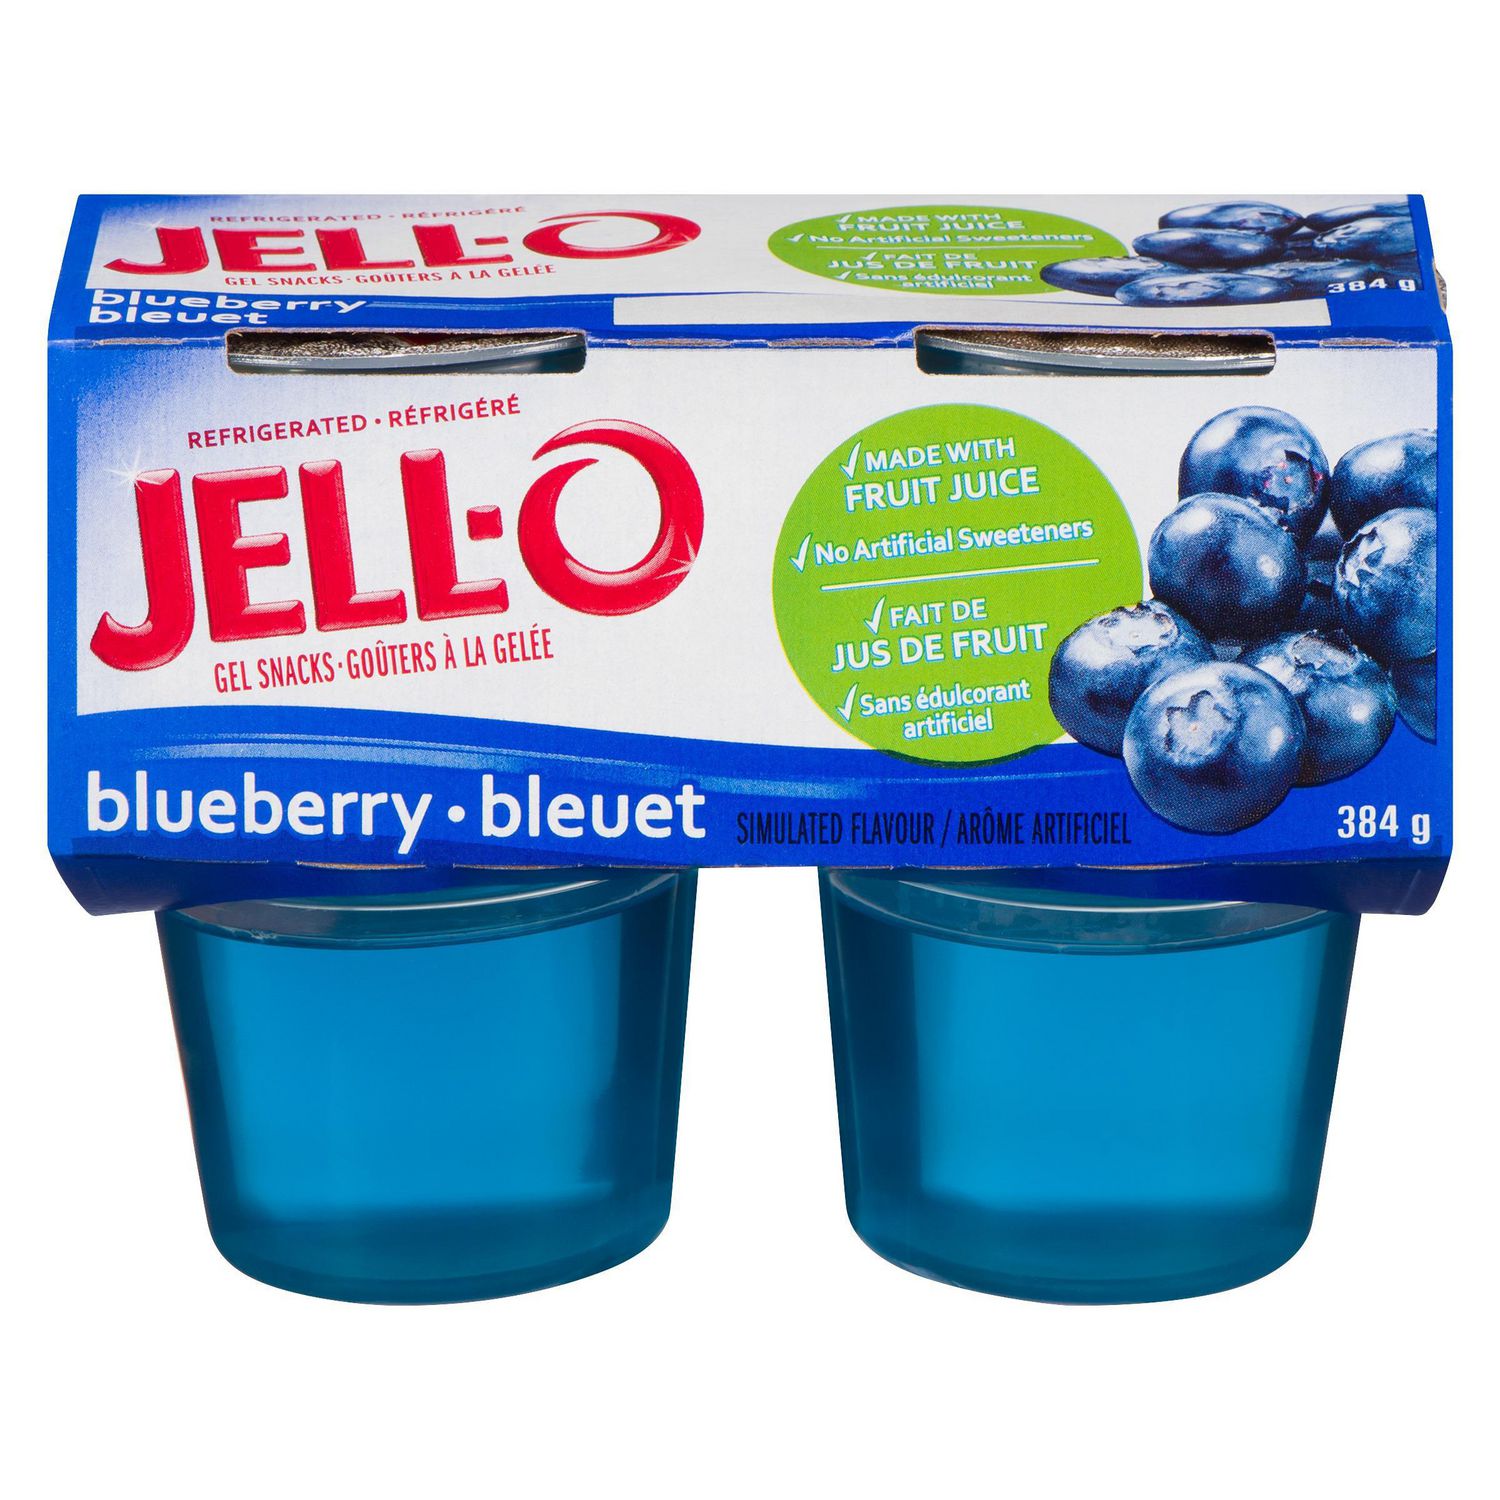 Jell O Refrigerated Gelatin Snacks Blueberry Walmart Canada.